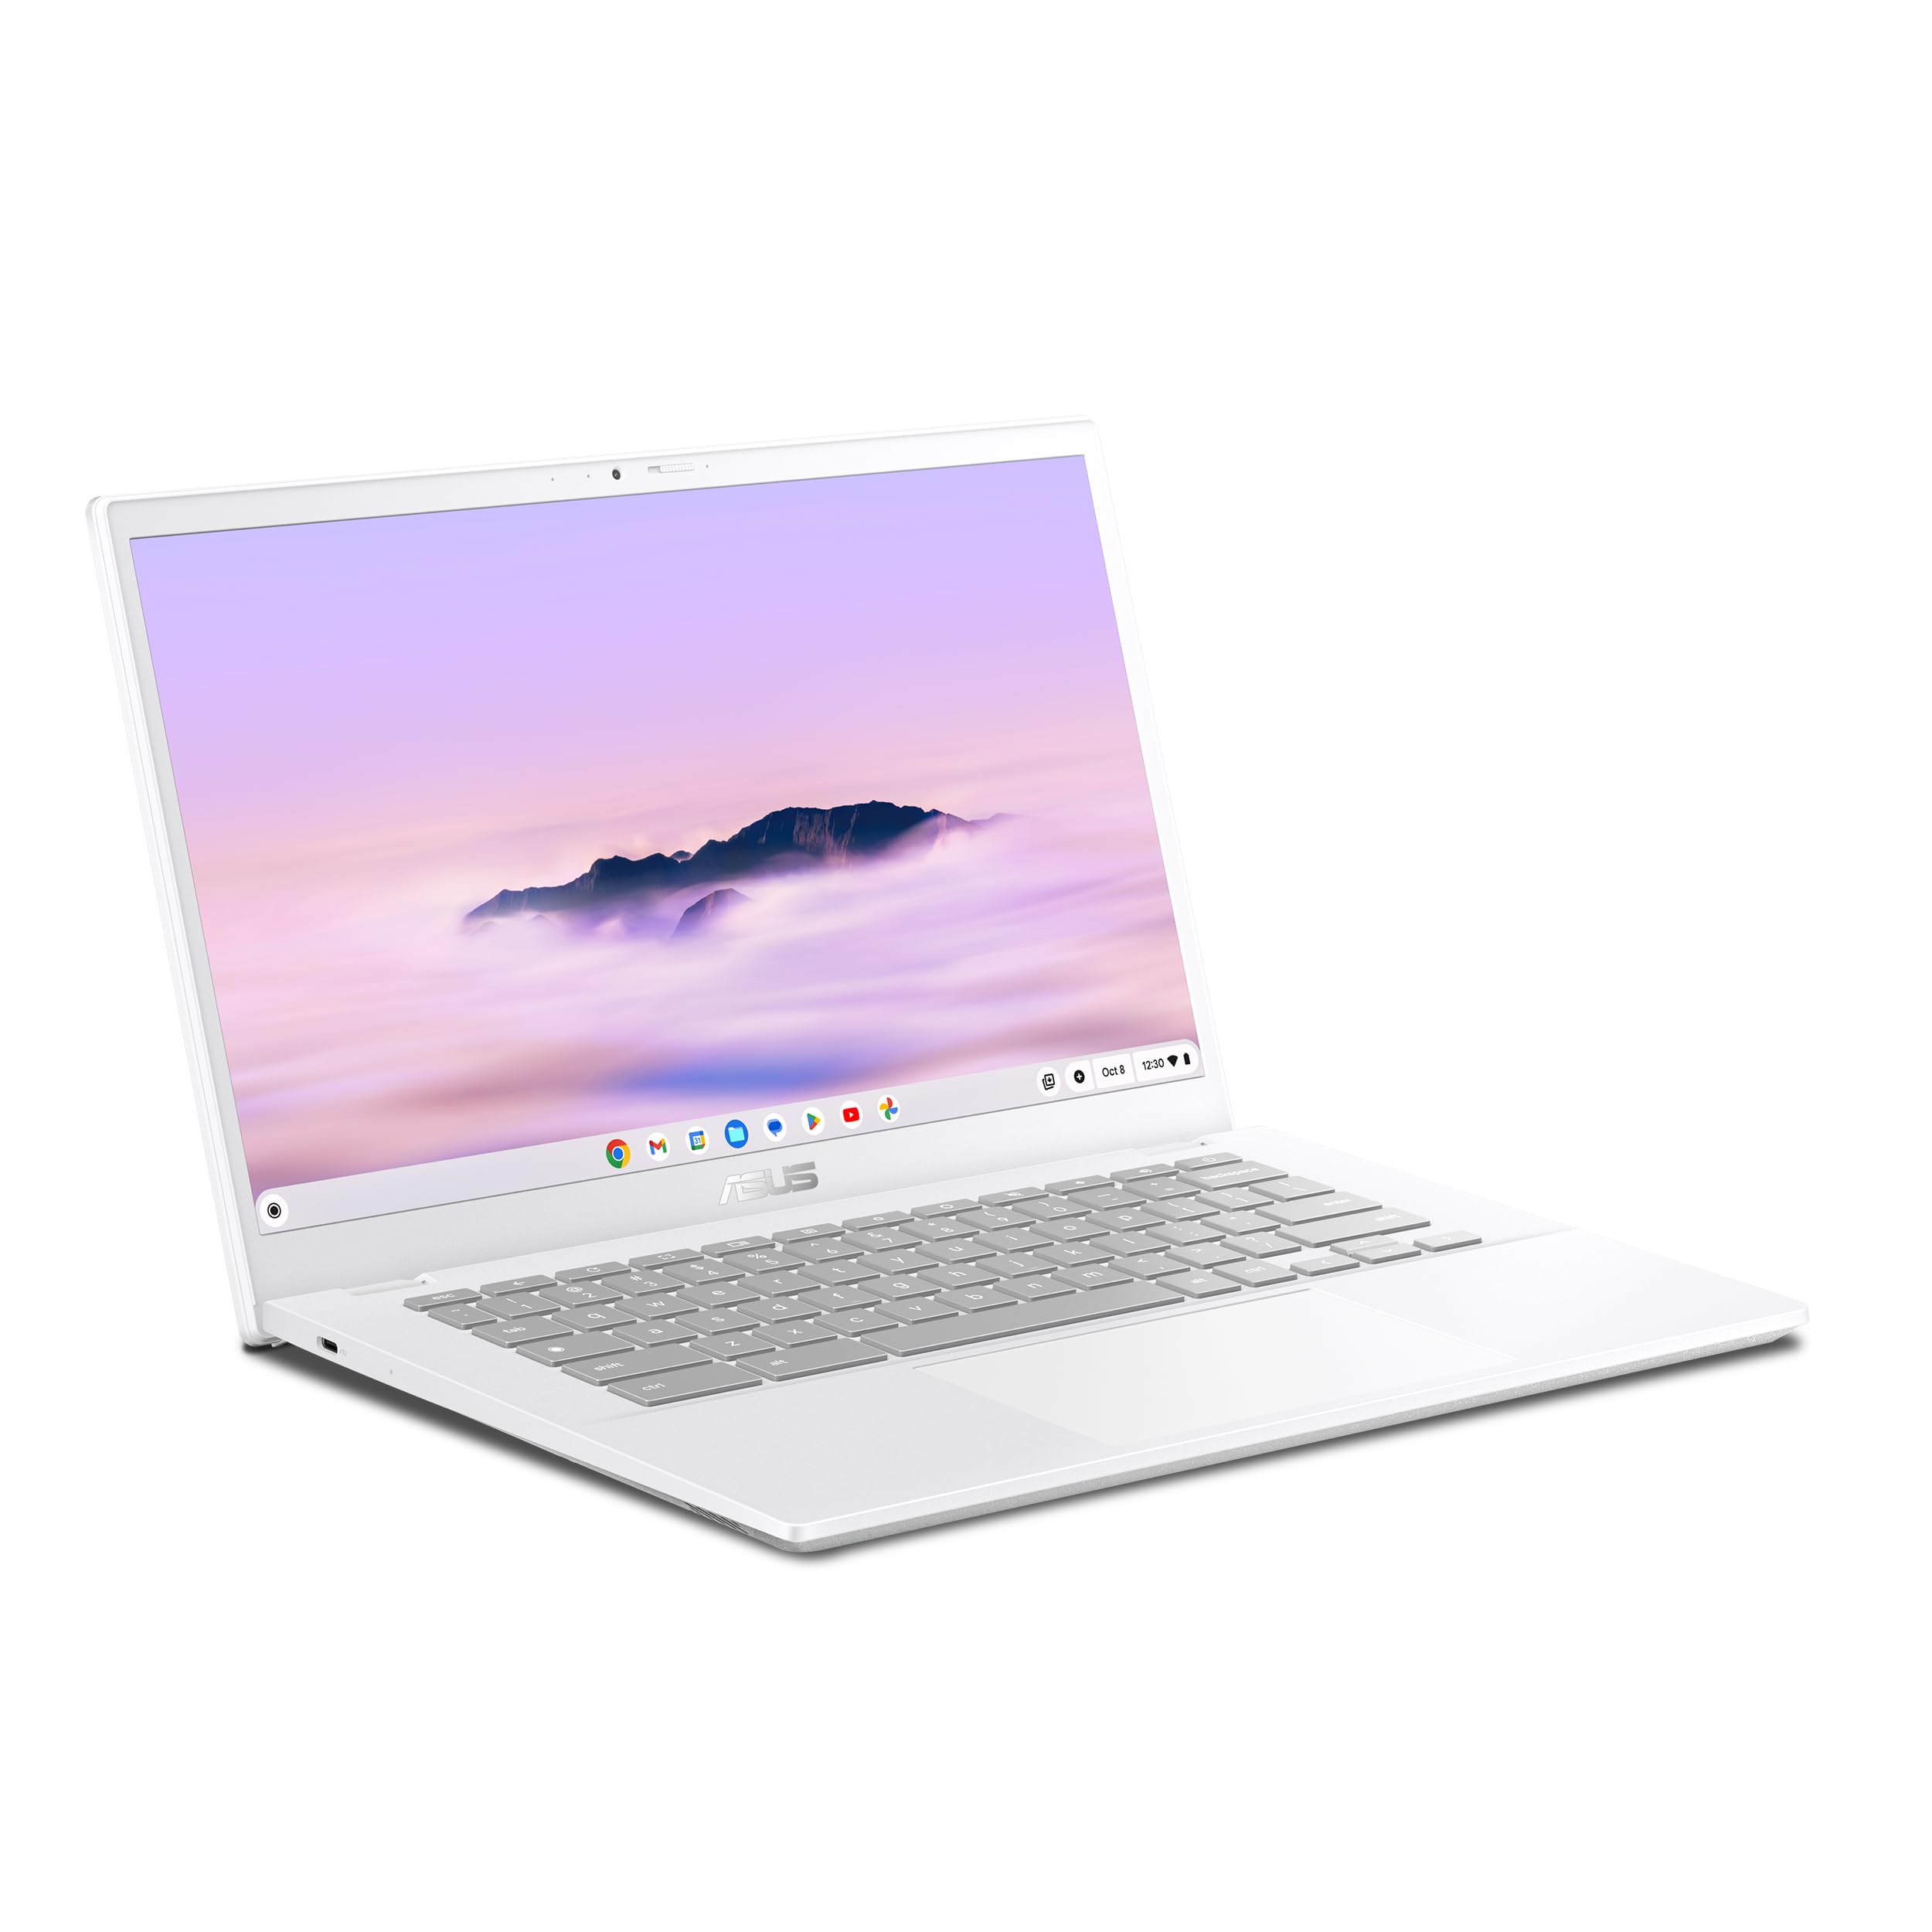 ASUS Chromebook Plus CX34 Laptop, 14